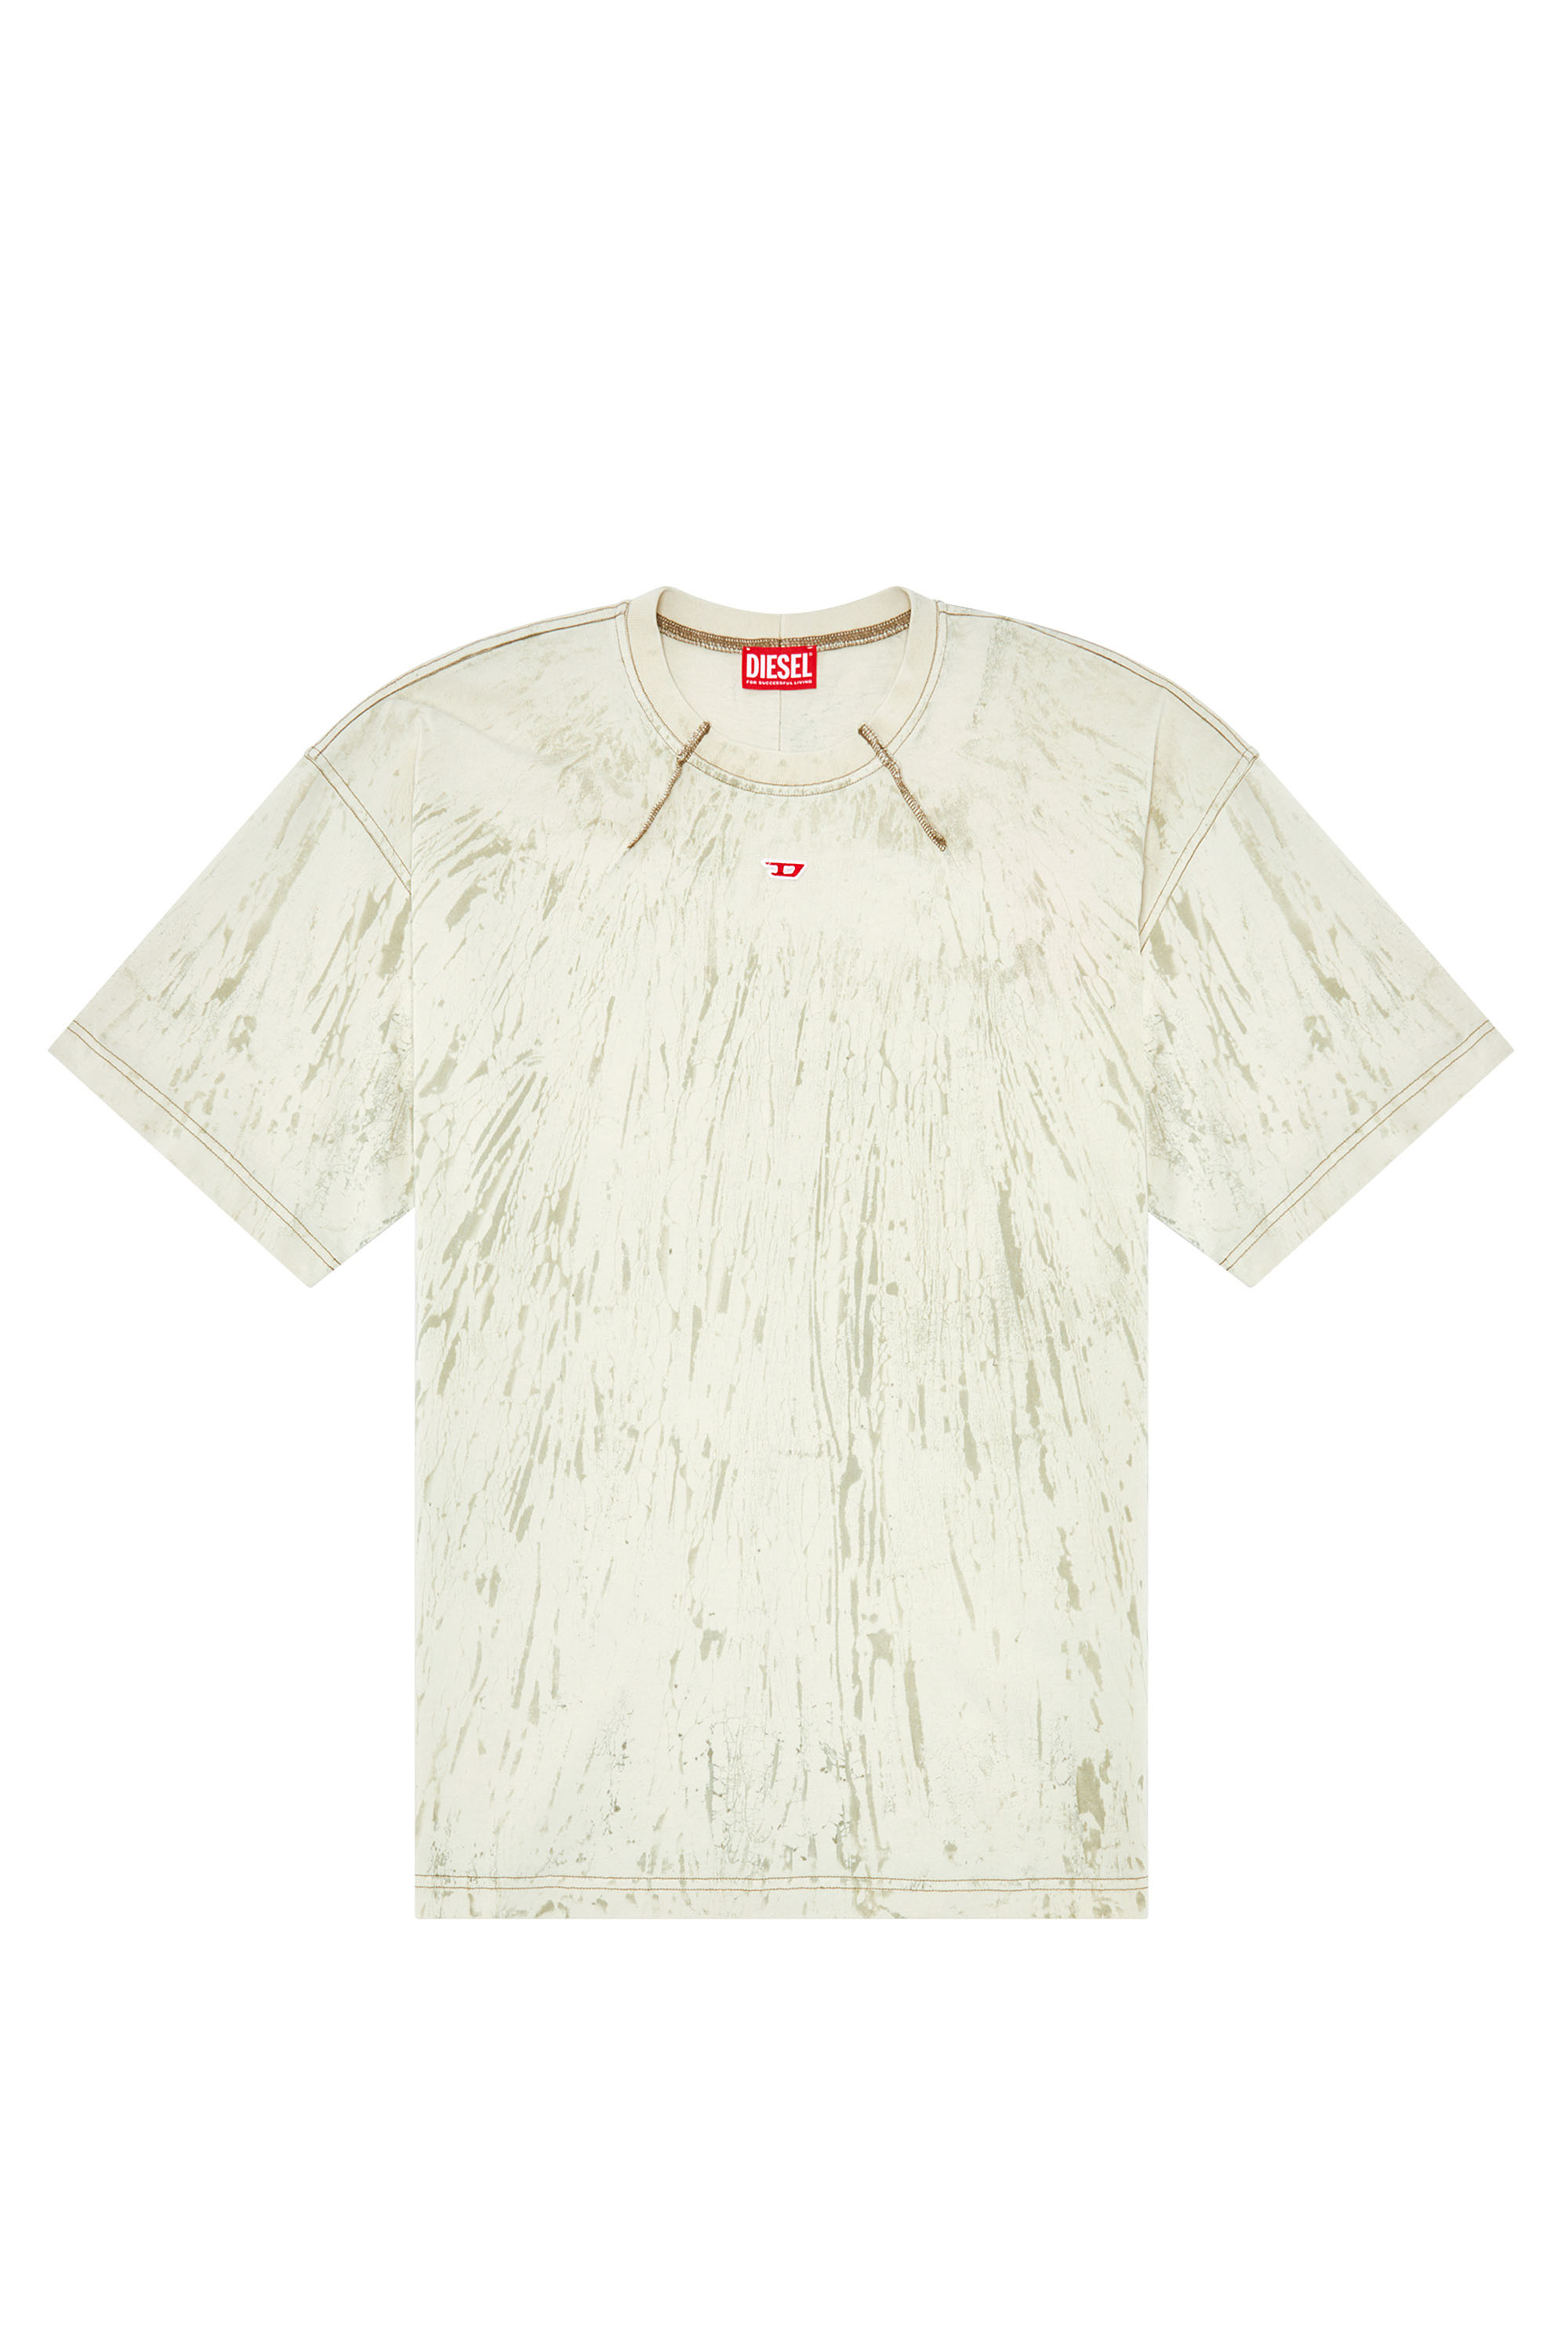 Diesel - T-COS, Homme T-shirt en jersey effet plâtre in Blanc - Image 4